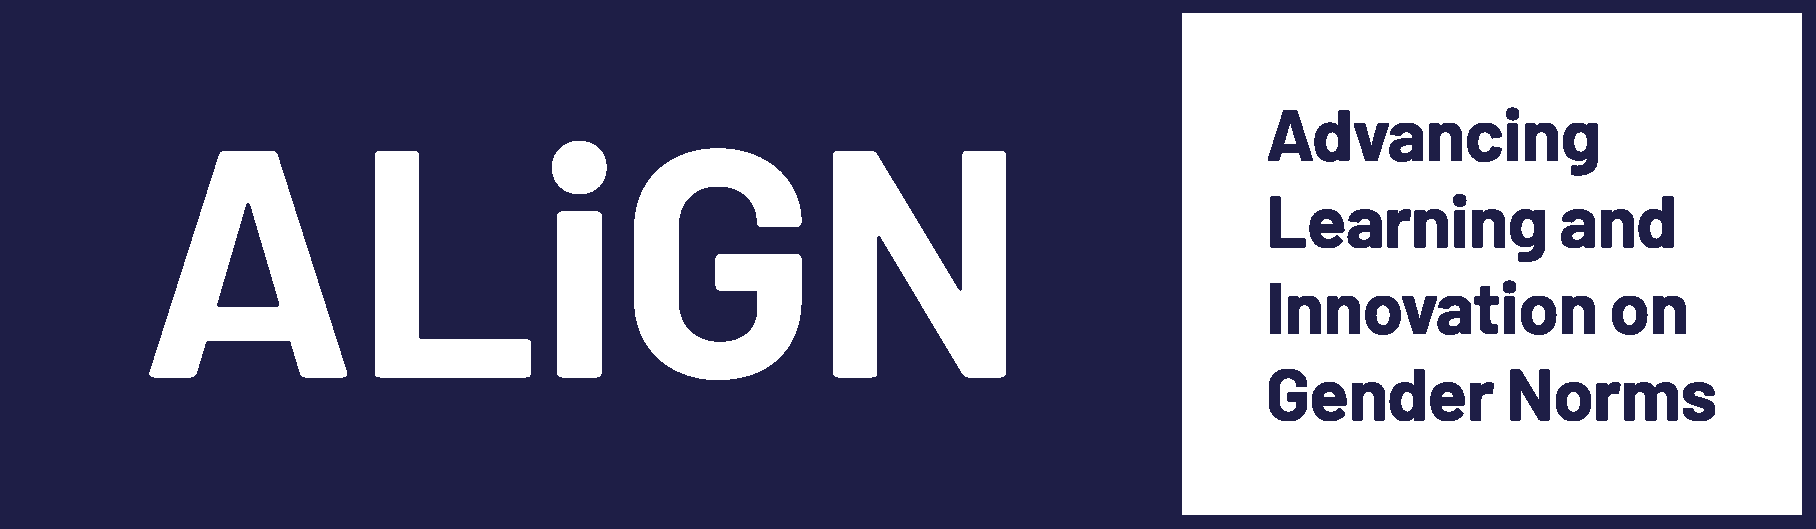 align-logo-colour-rgb_002.png